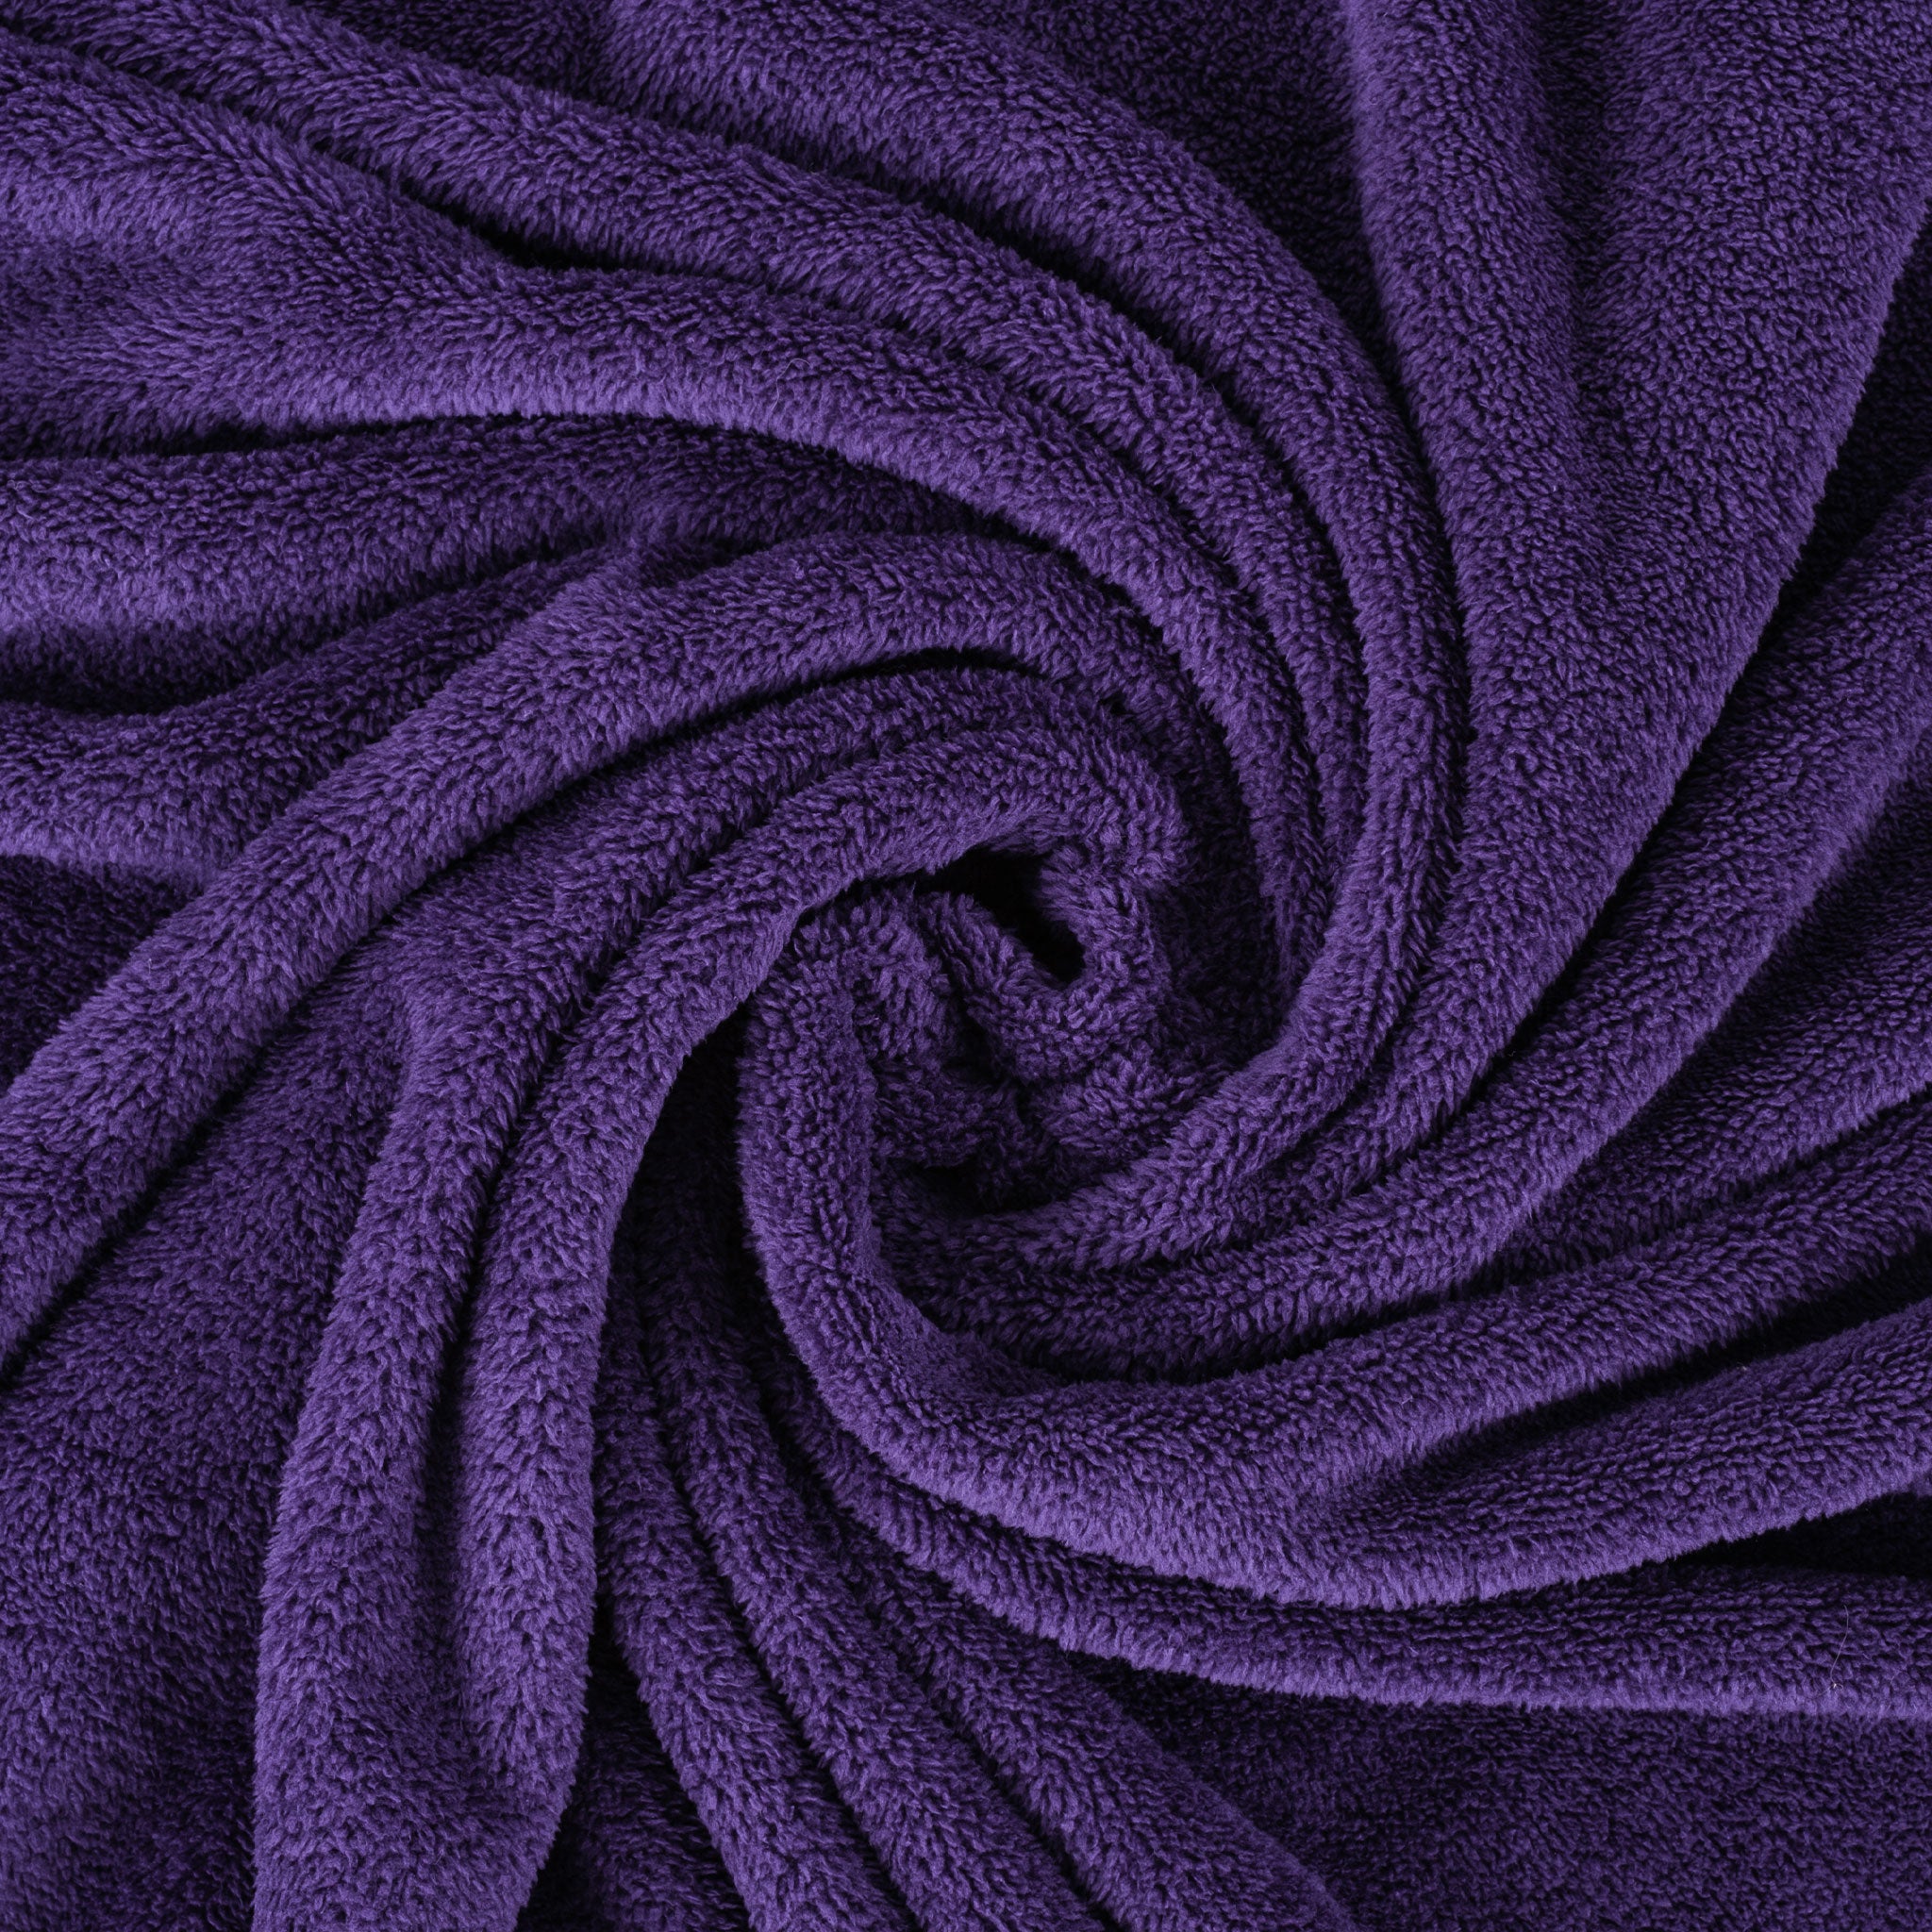 American Soft Linen - Bedding Fleece Blanket - Wholesale - 9 Set Case Pack - Queen Size 85x90 inches - Purple - 5